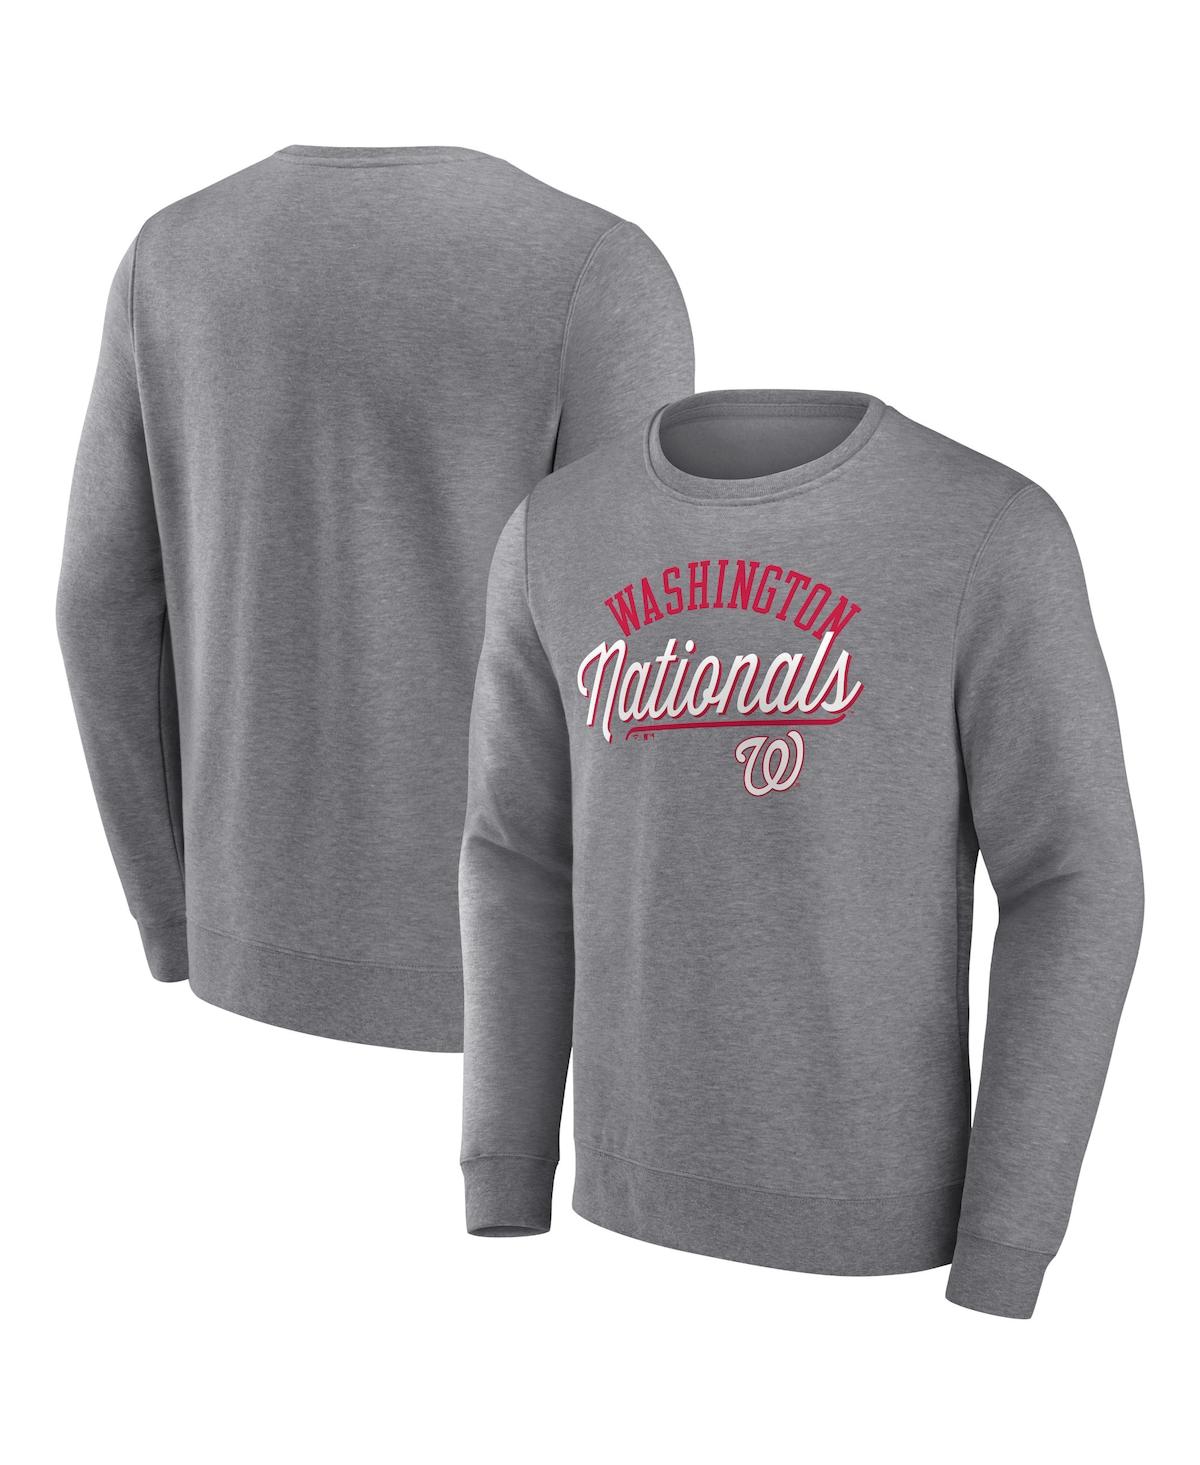 Shop Fanatics Men's  Heather Gray Washington Nationals Simplicity Pullover Sweatshirt